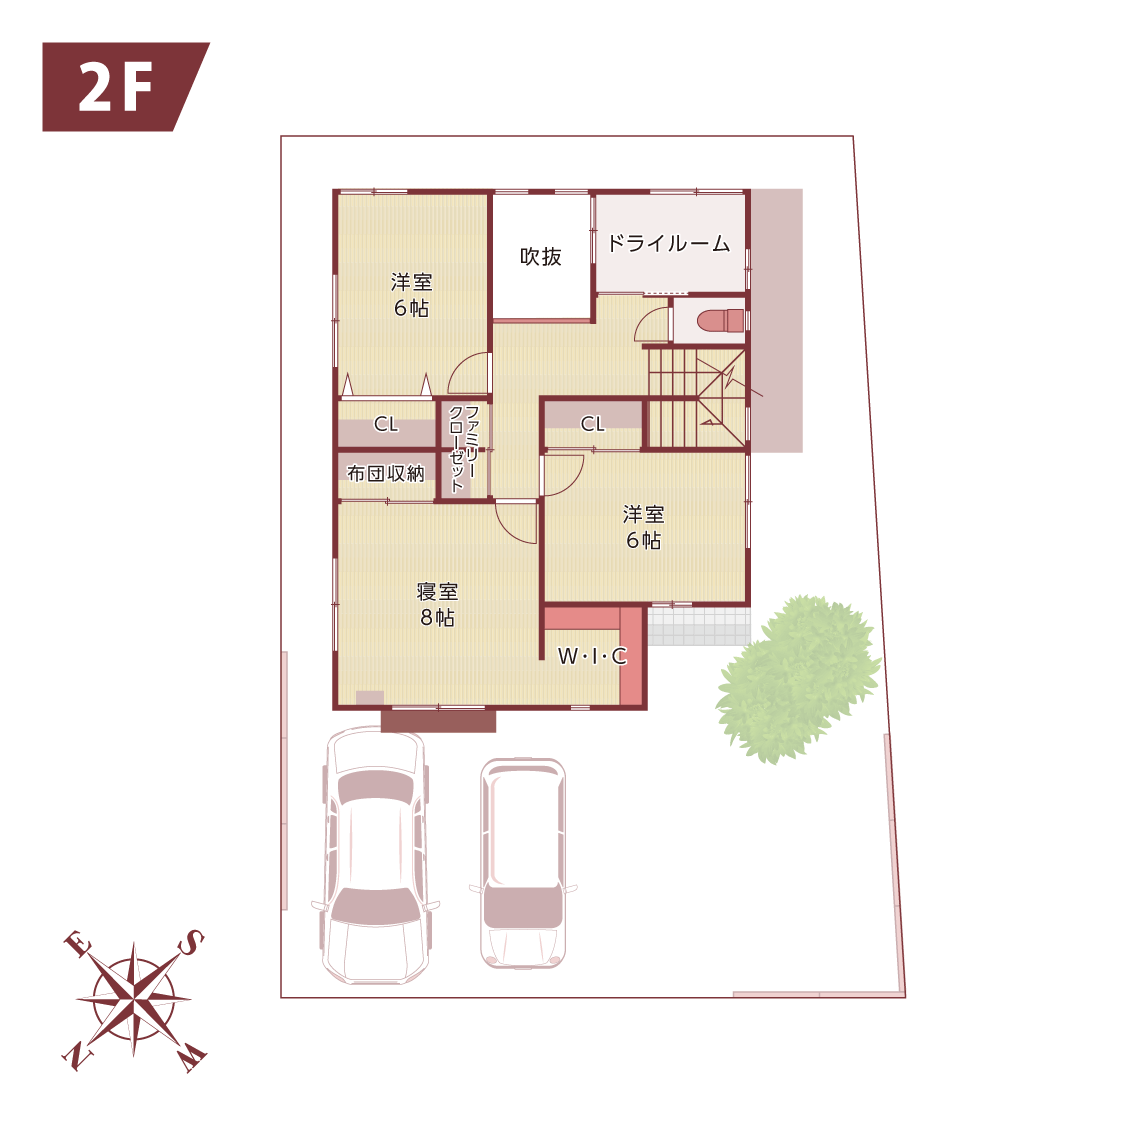 GARDEN TERRACE Seiroyamaの家 floor map 2F